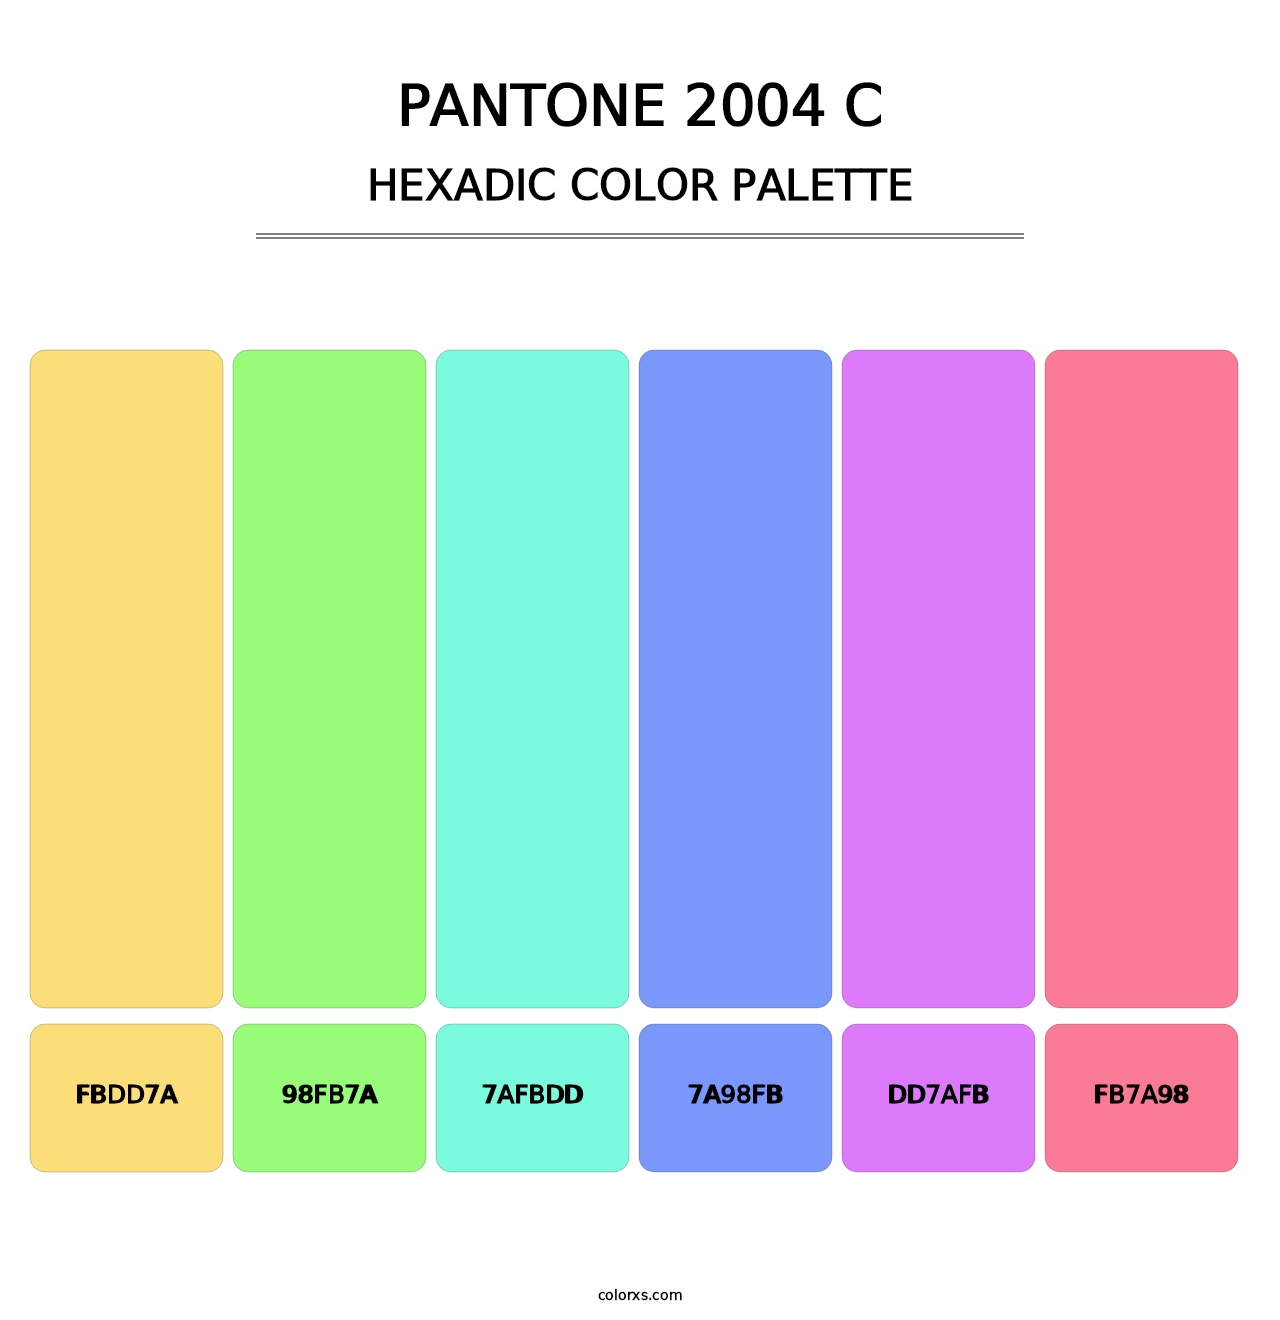 PANTONE 2004 C - Hexadic Color Palette